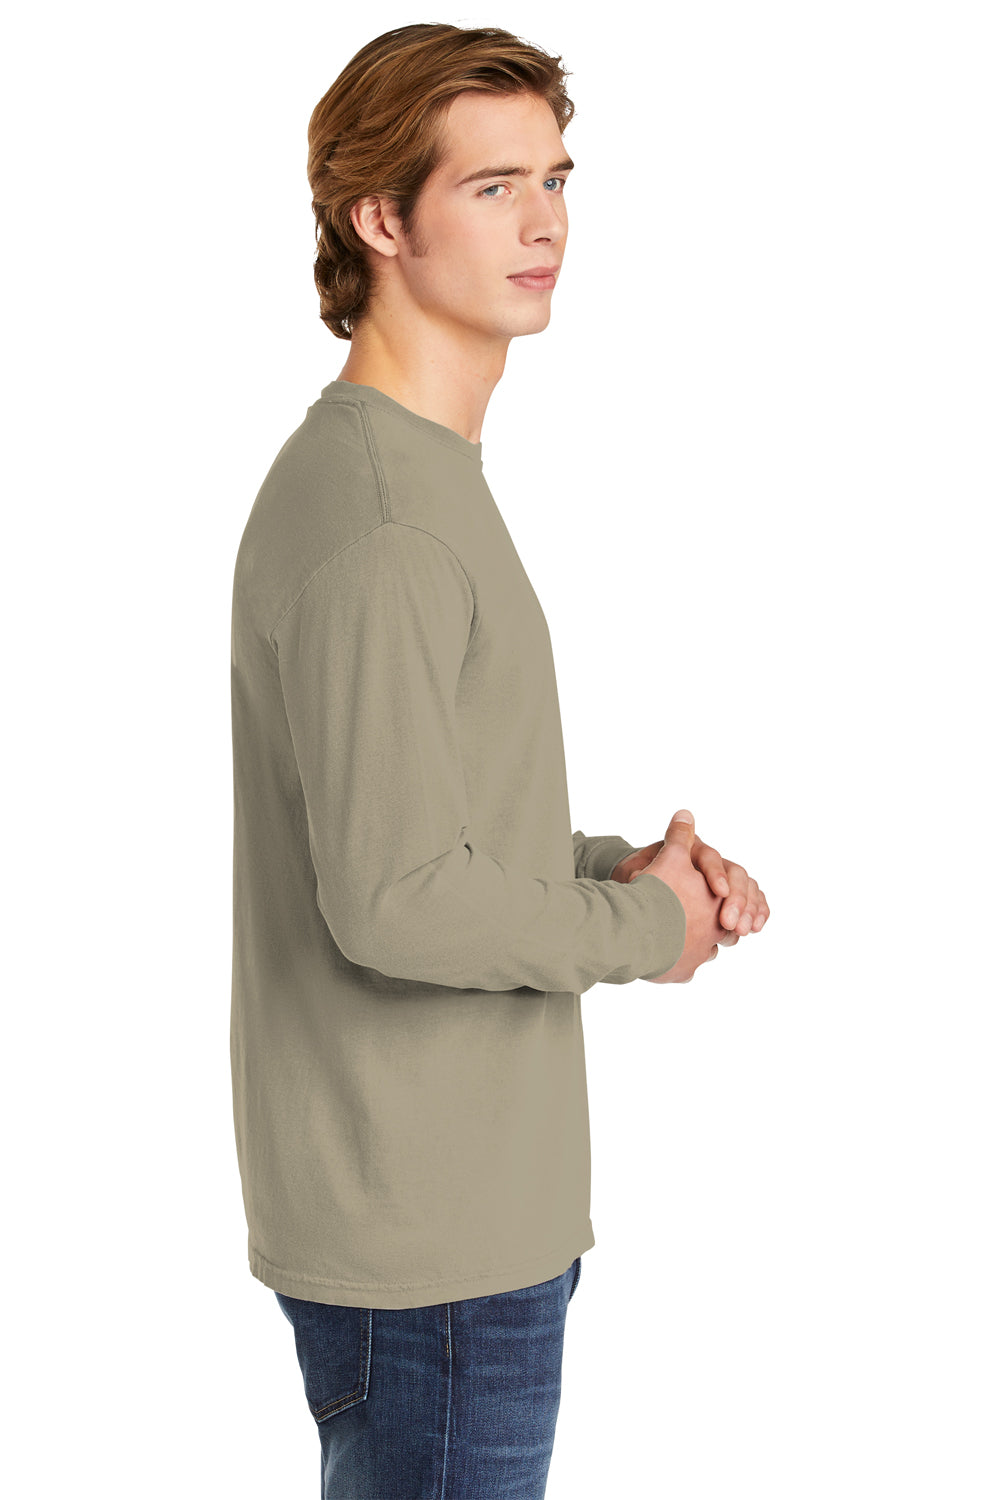 Comfort Colors 6014/C6014 Mens Long Sleeve Crewneck T-Shirt Sandstone Side